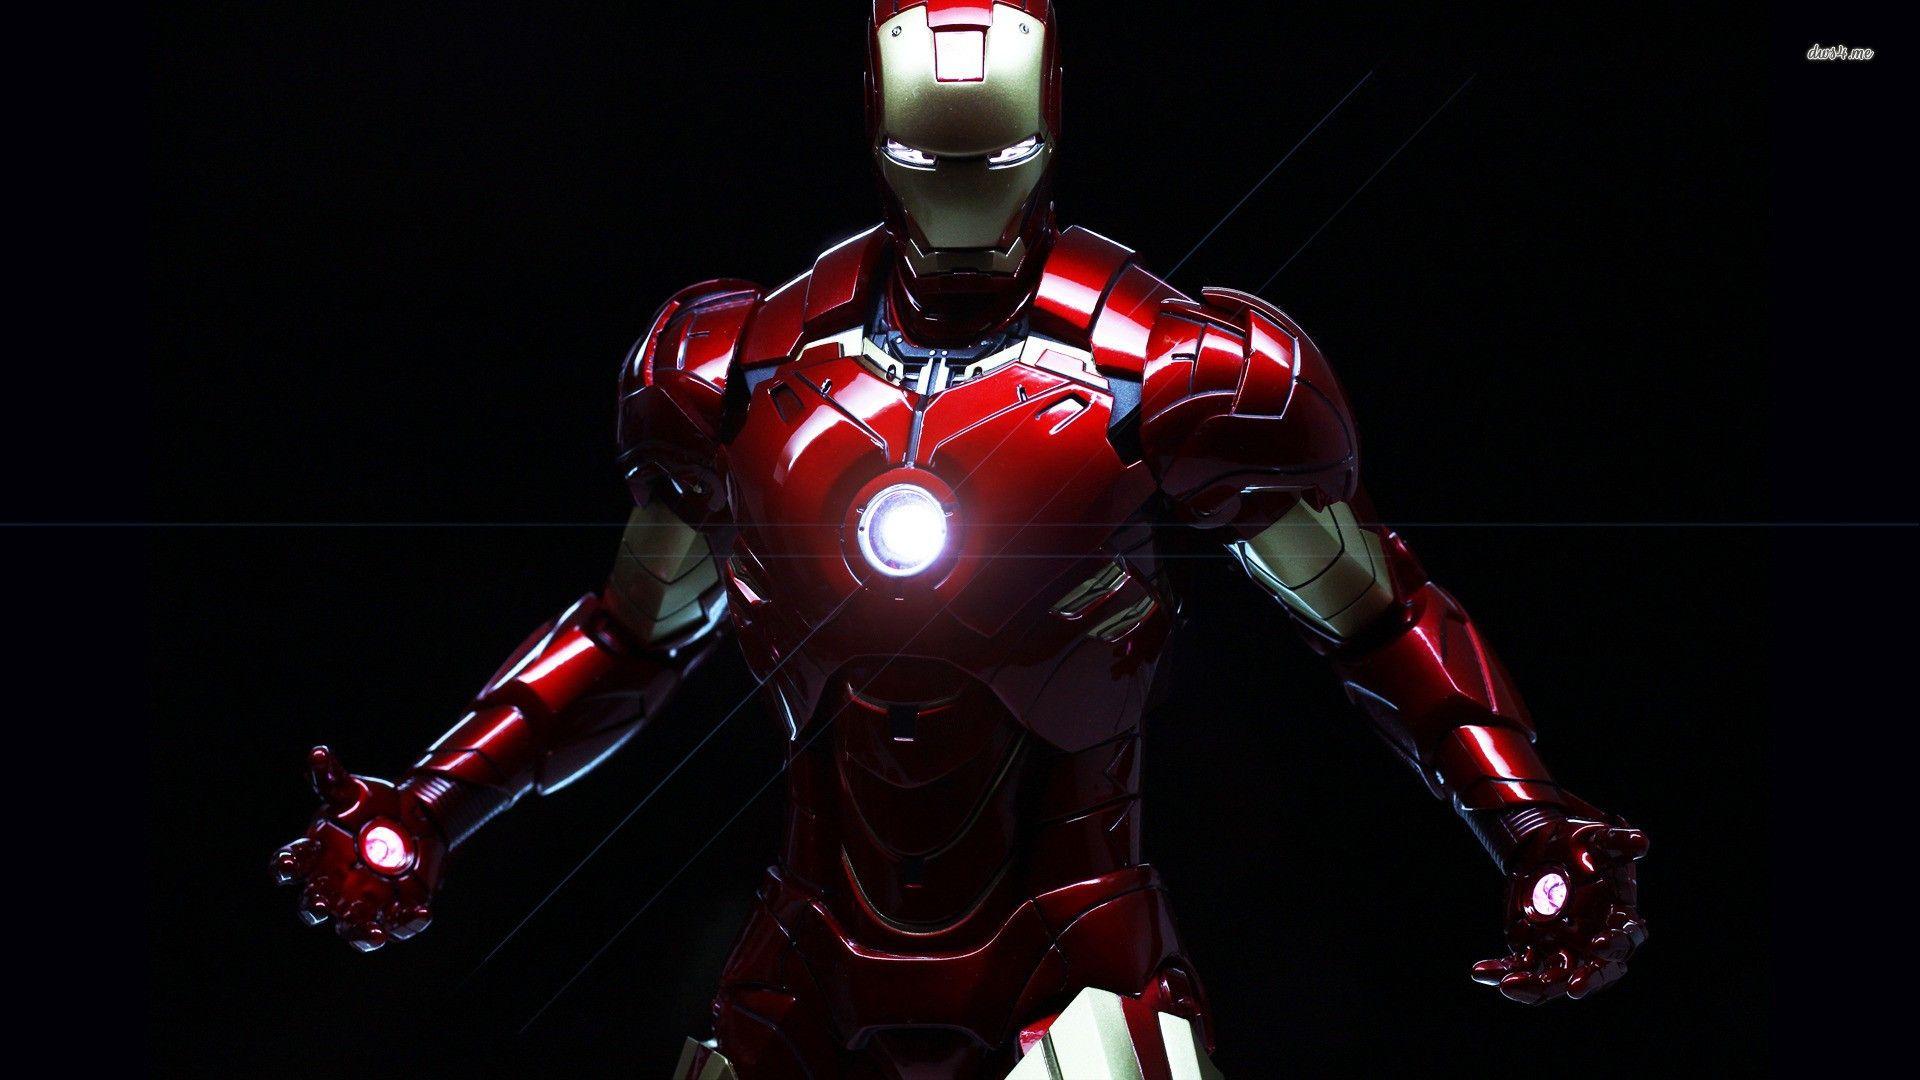 Iron Man 3 Wallpaper HD For iPhone. iron man face wallpaper group